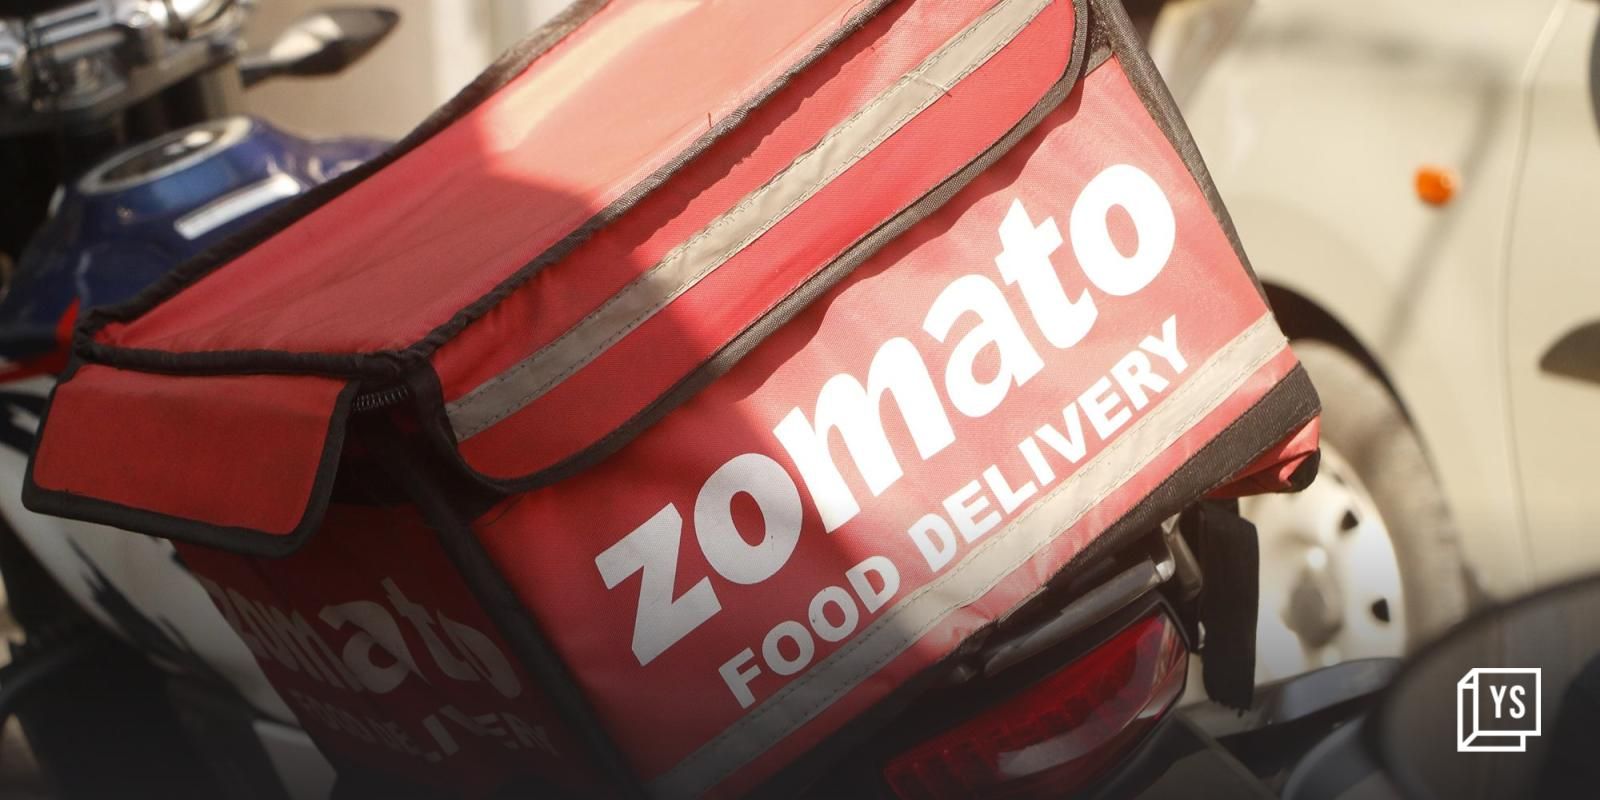 Zomato begins testing platform fee on food orders: Report